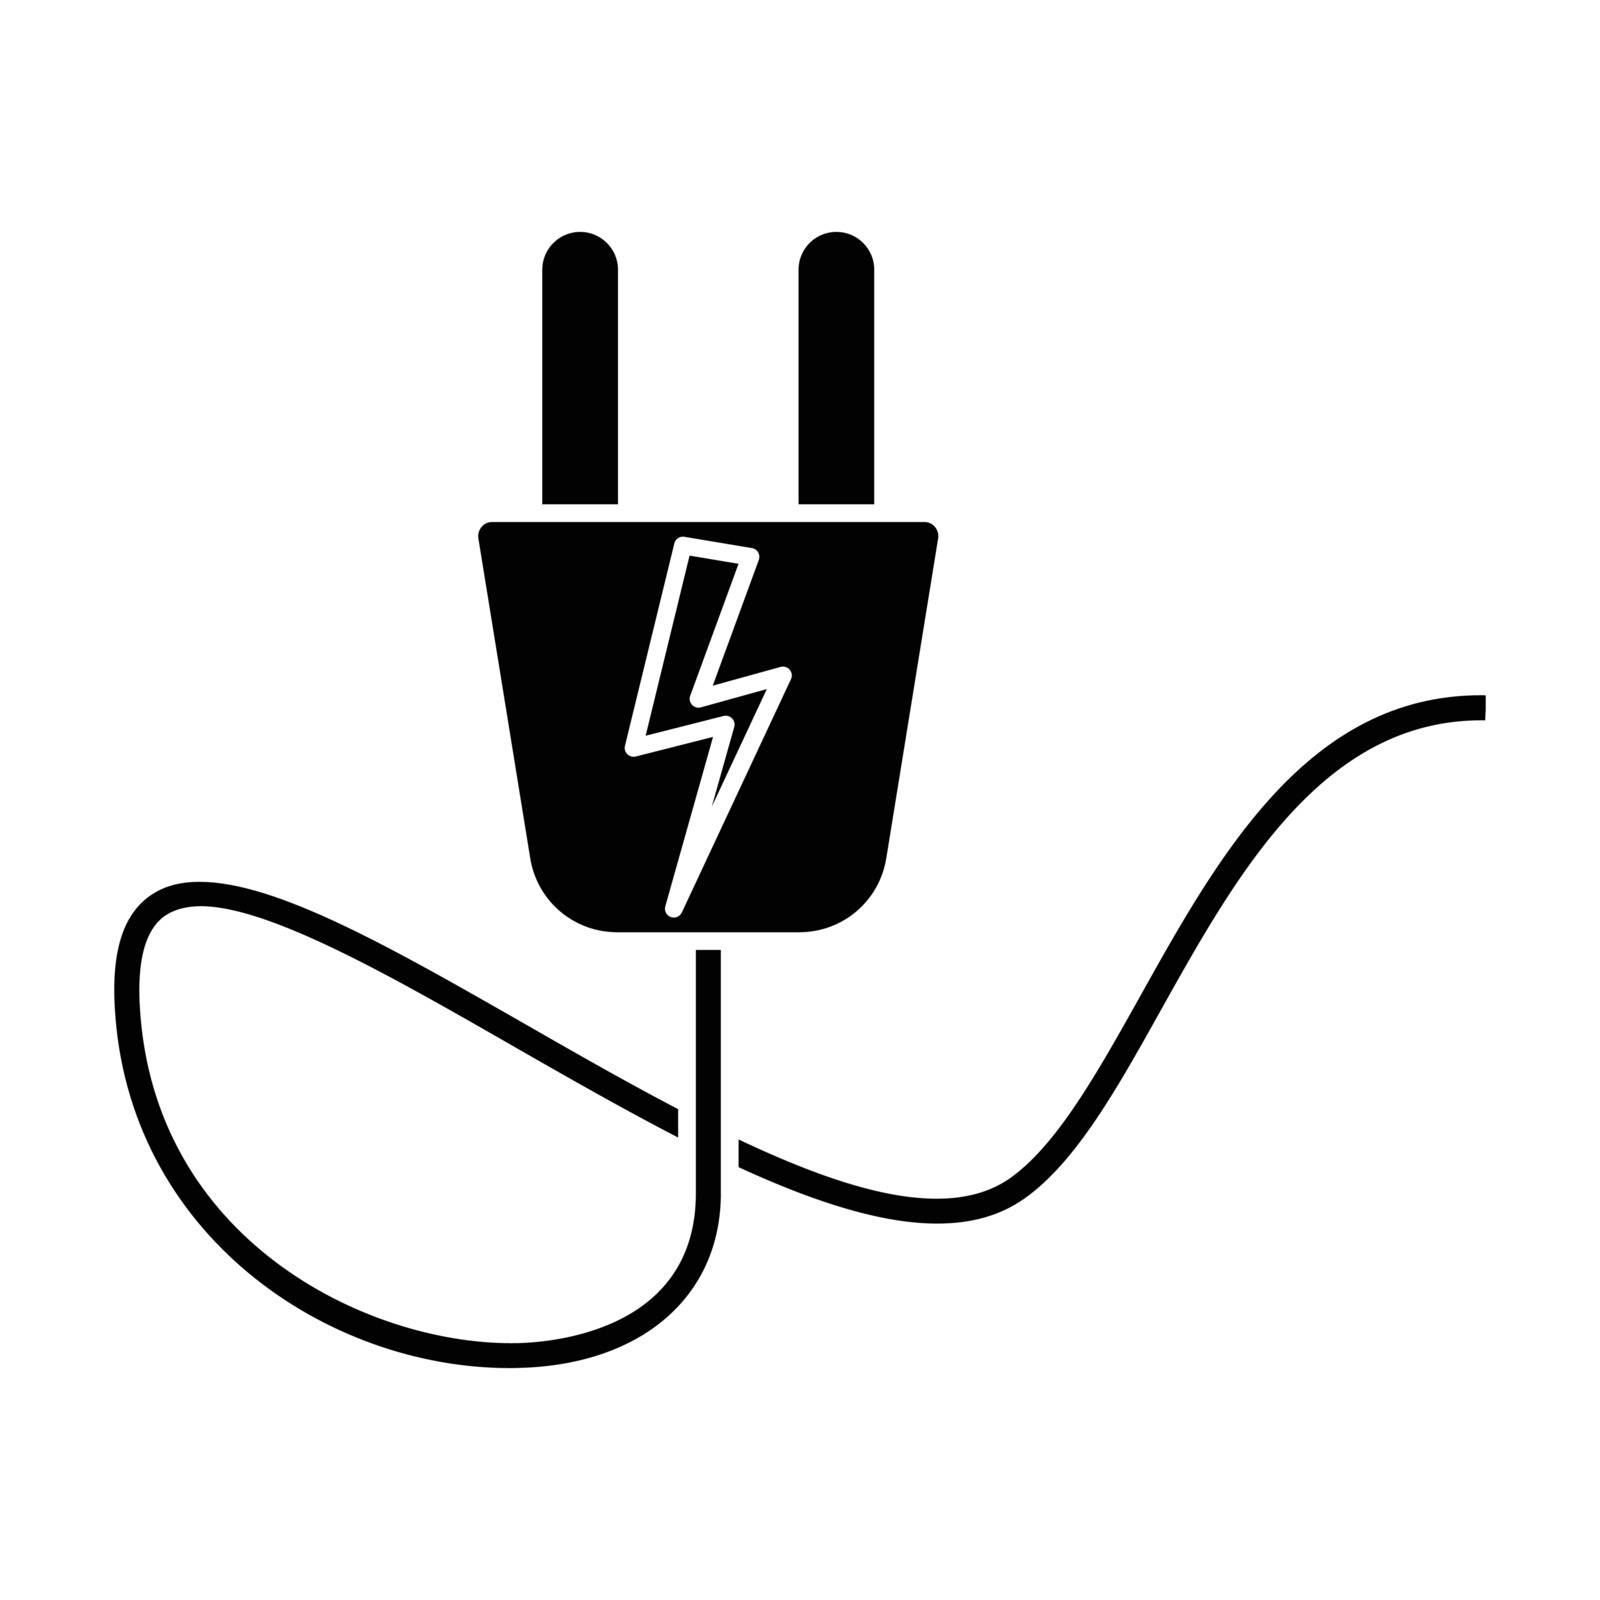 flat black electric plug icon by ang_bay